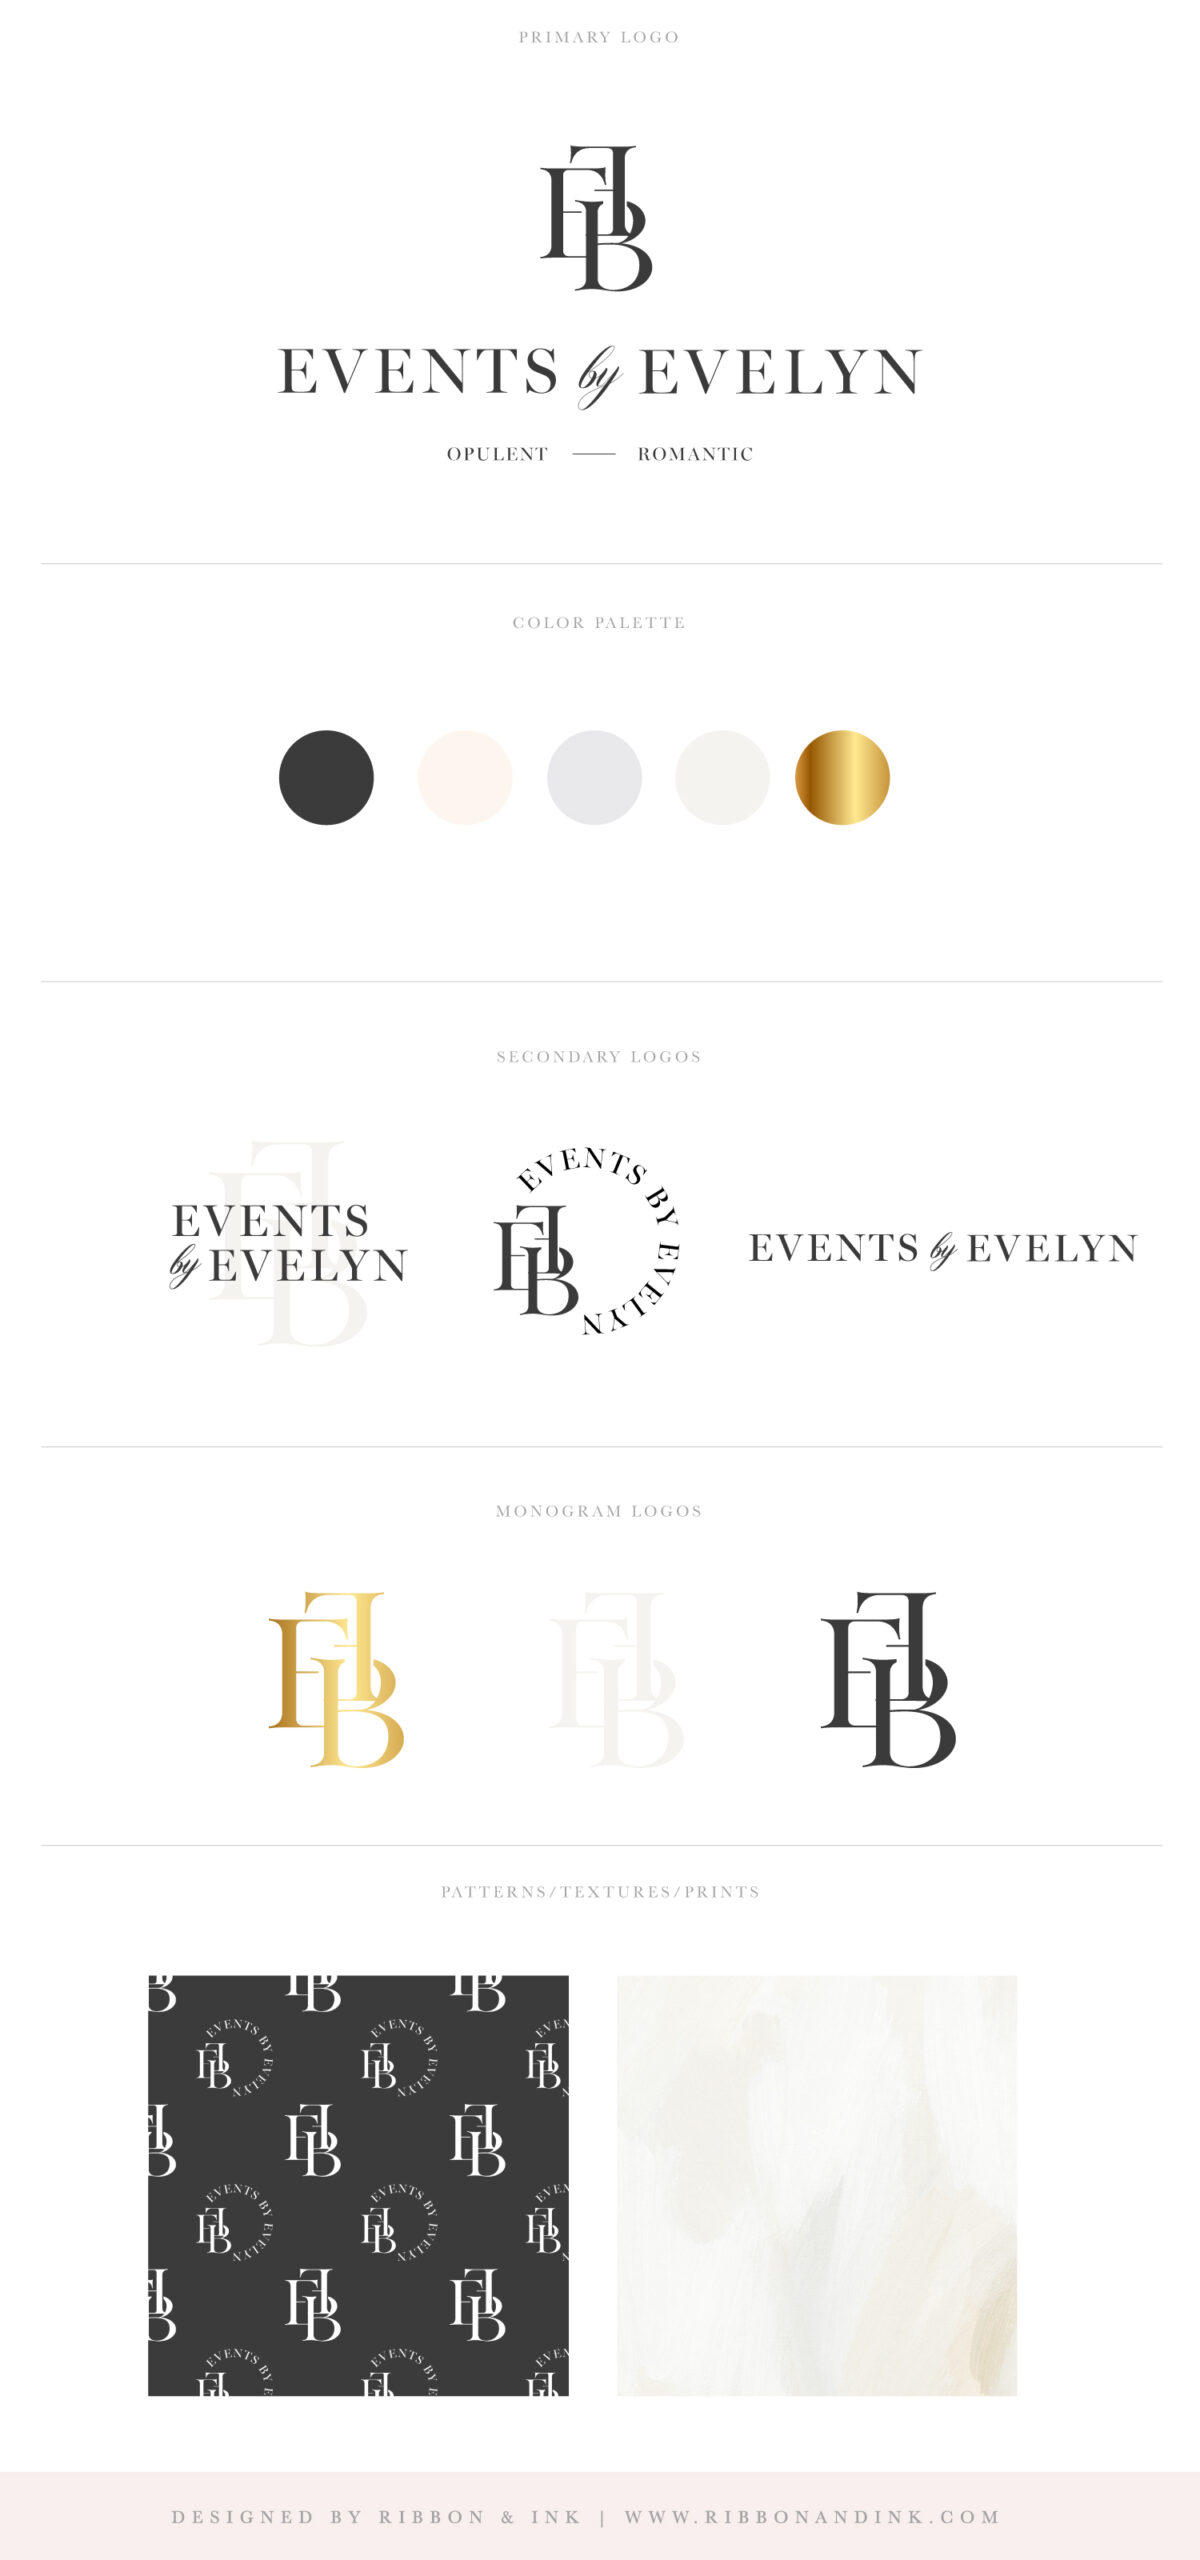 brand board / branding identity / wedding planner logo / glam / luxury / luxe / bold / romantic